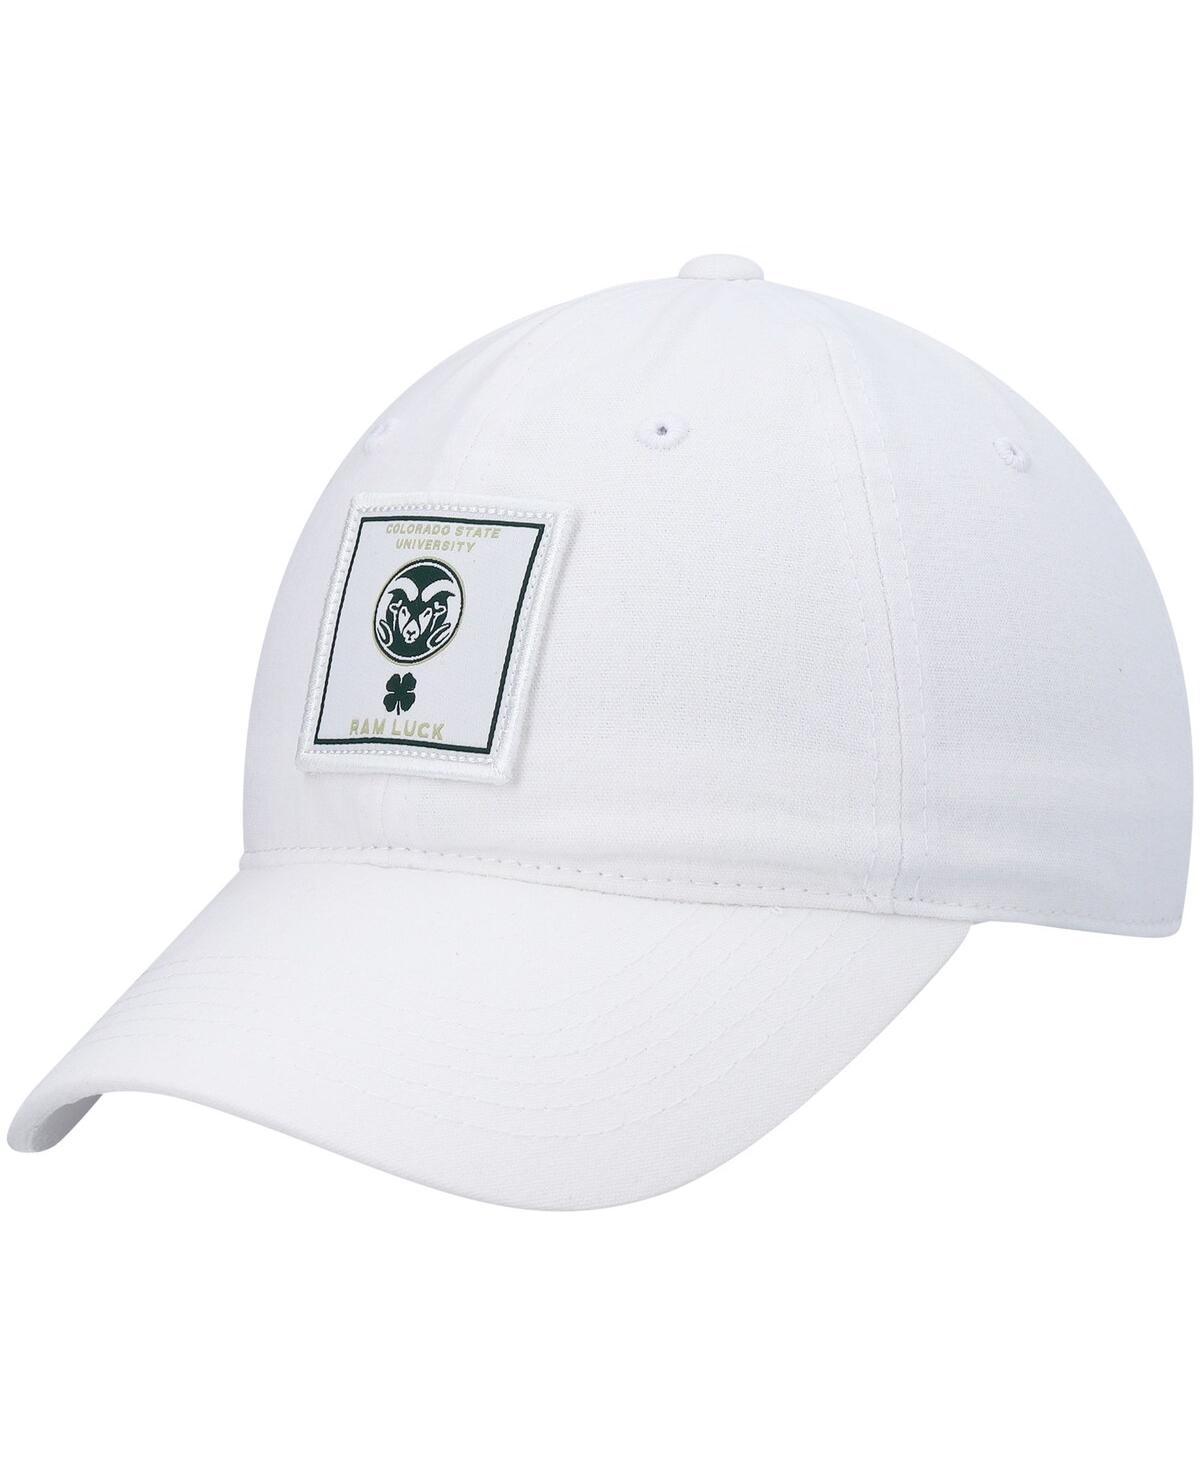 Shop Black Clover Men's White Colorado State Rams Dream Adjustable Hat